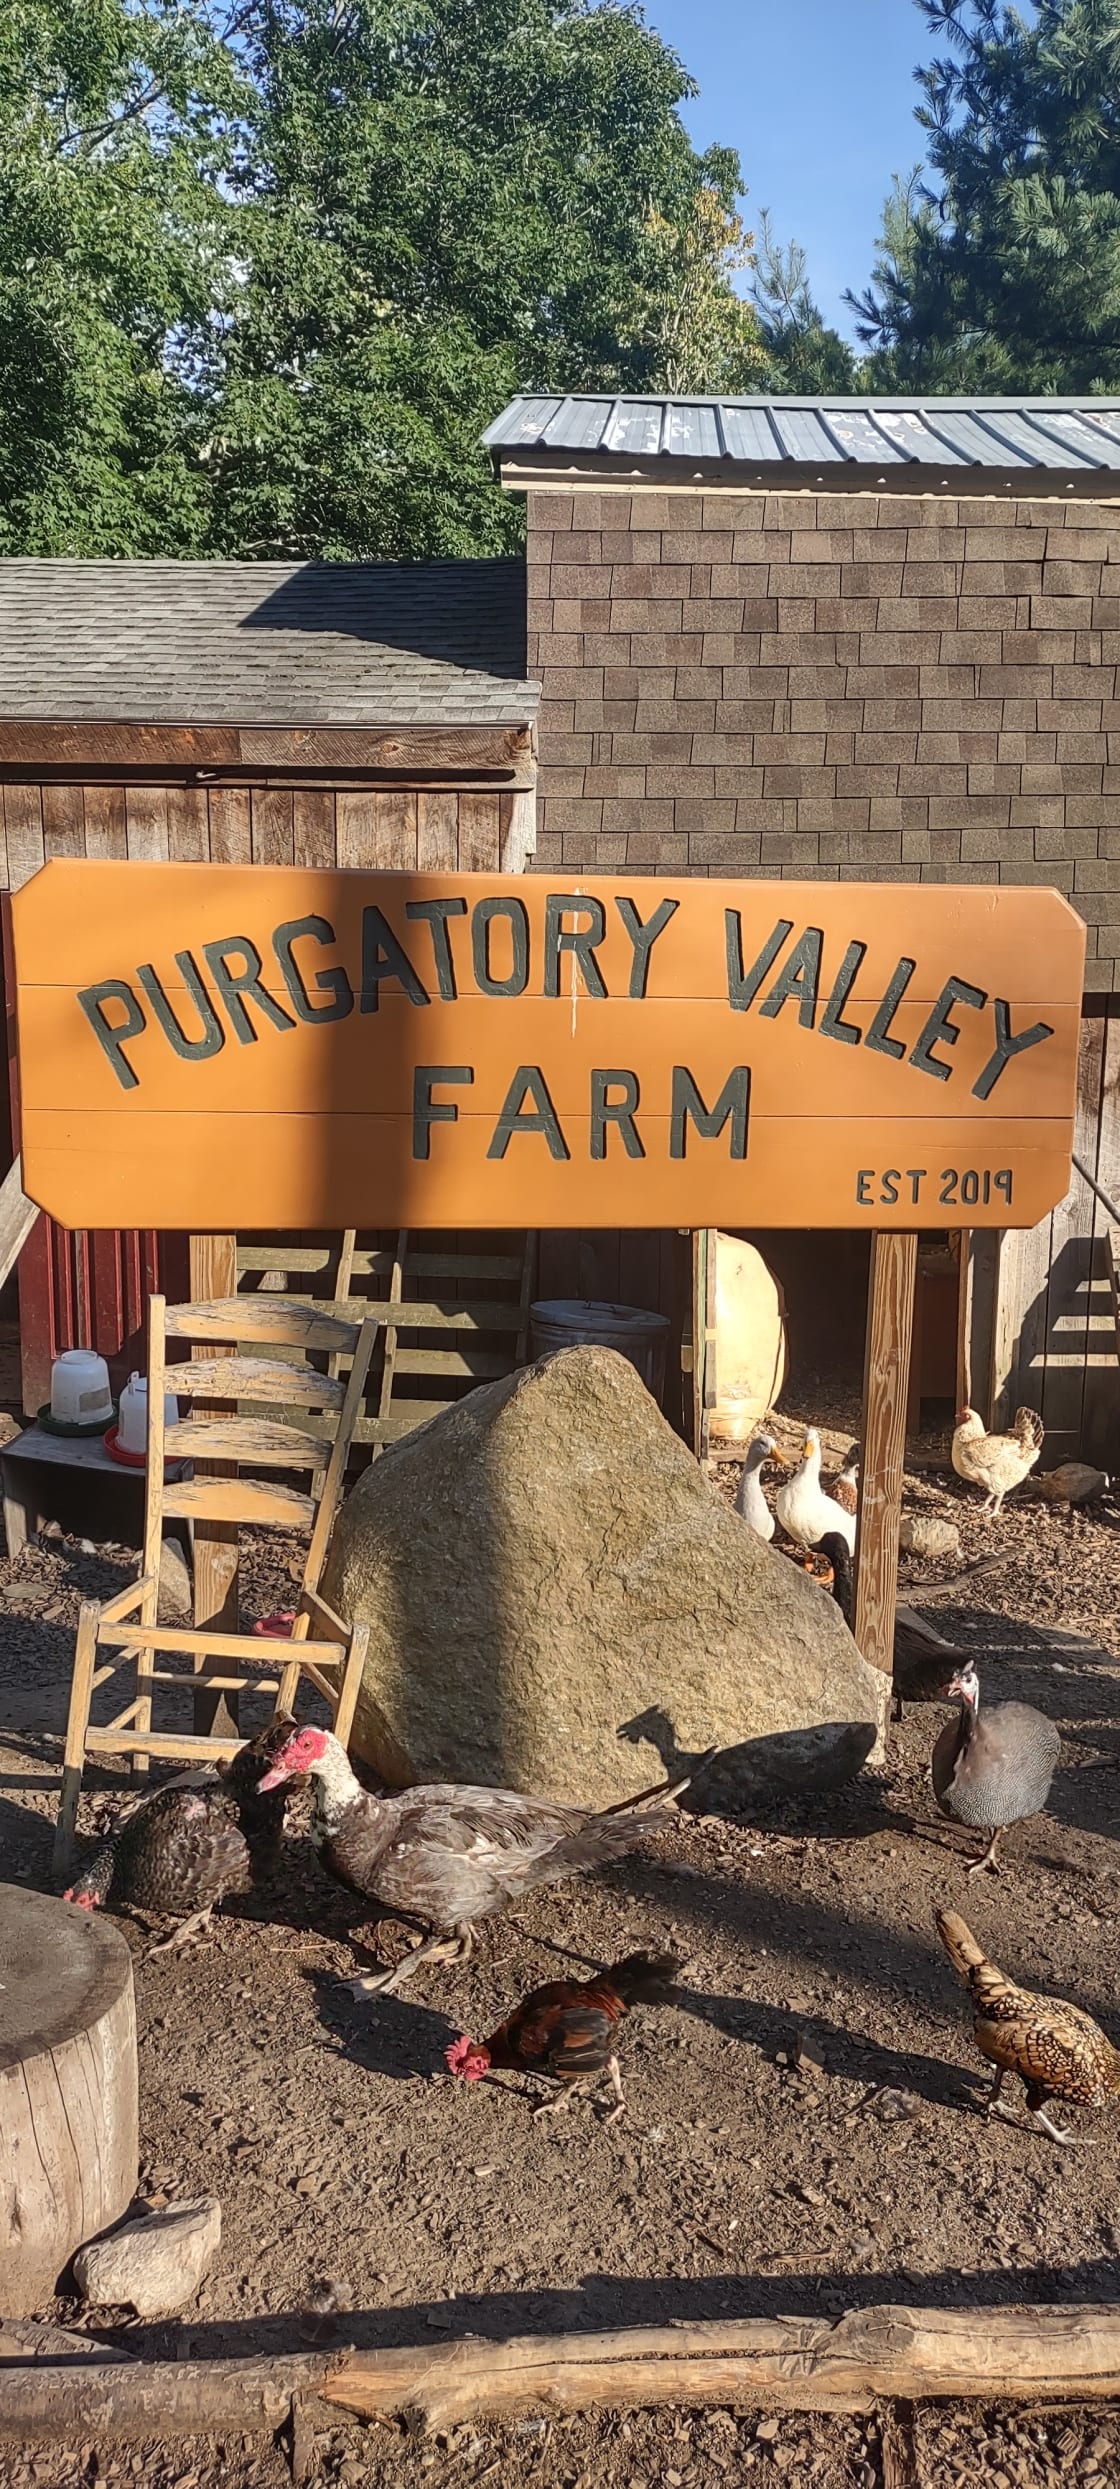 Purgatory Valley Farm